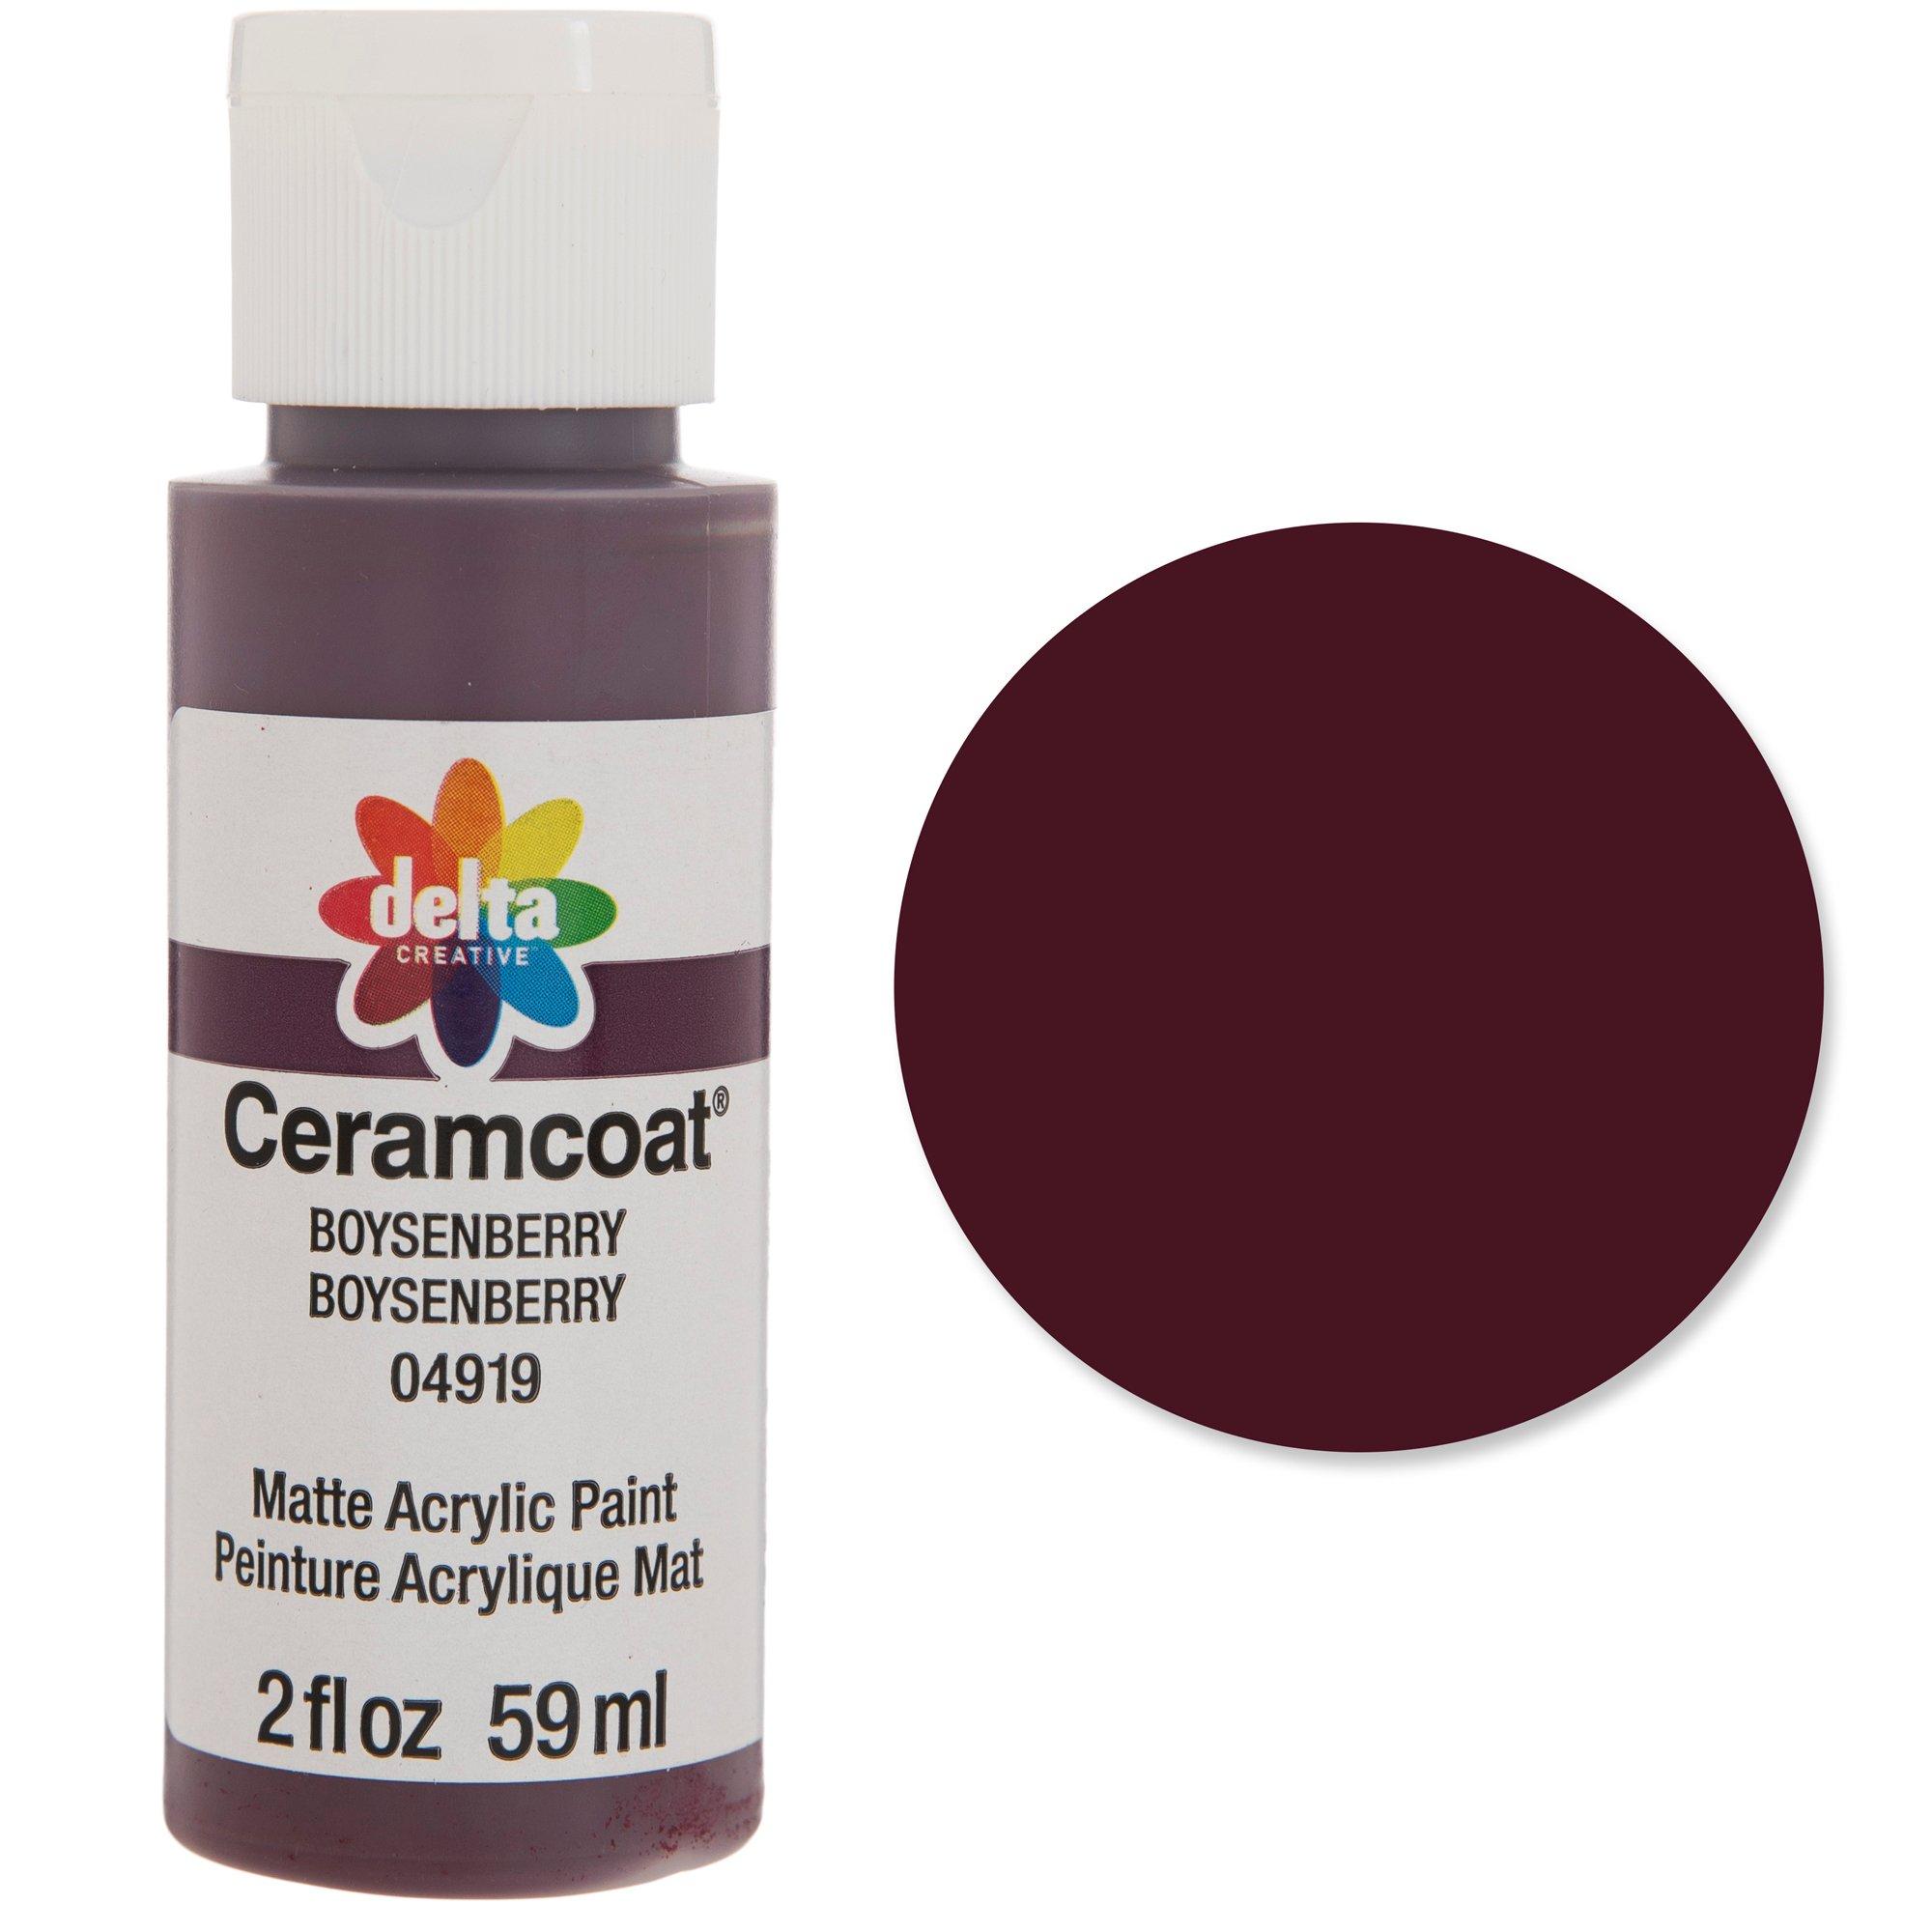 Ceramcoat Acrylic Paint, Black, 2 oz - 1 Pkg